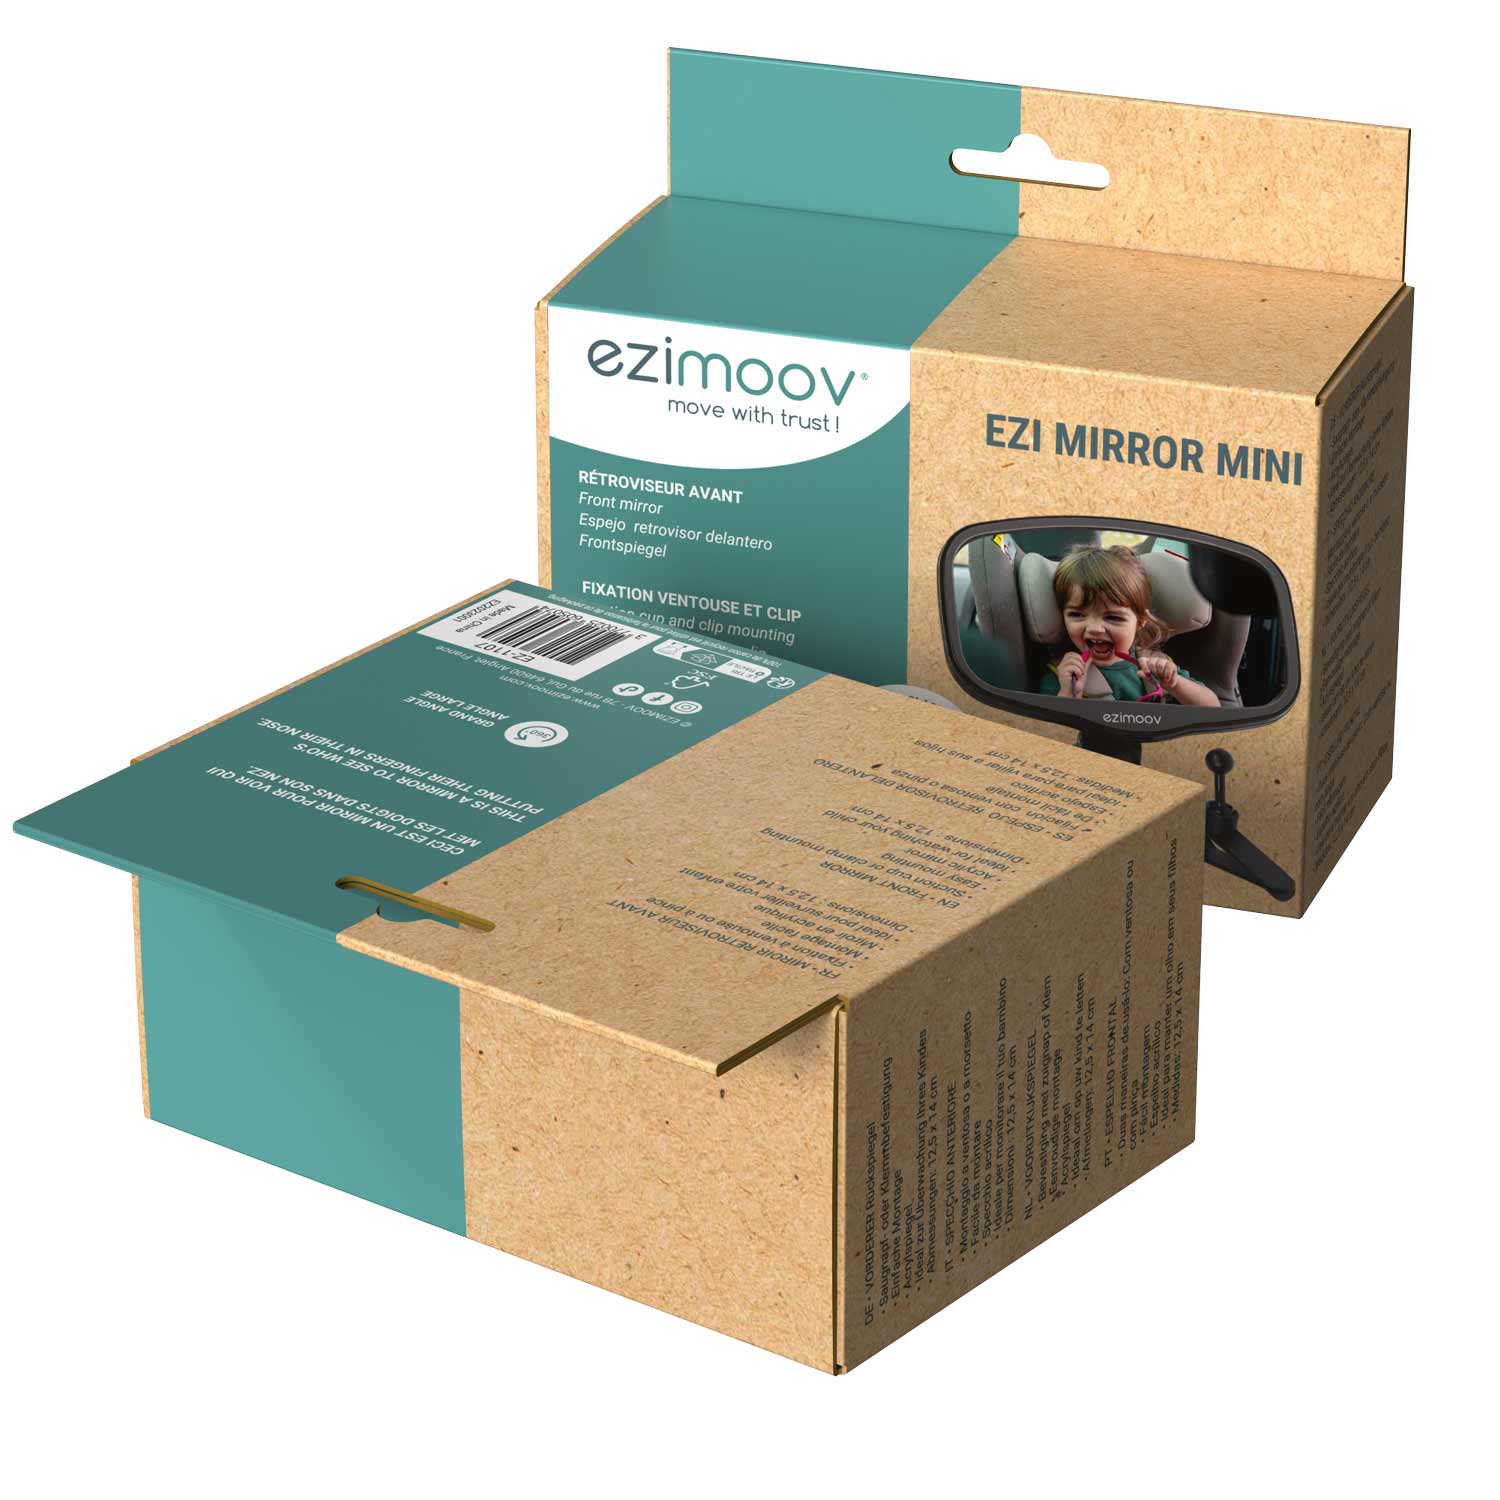 ezimoov_miroir_mini_ventouse_packaging